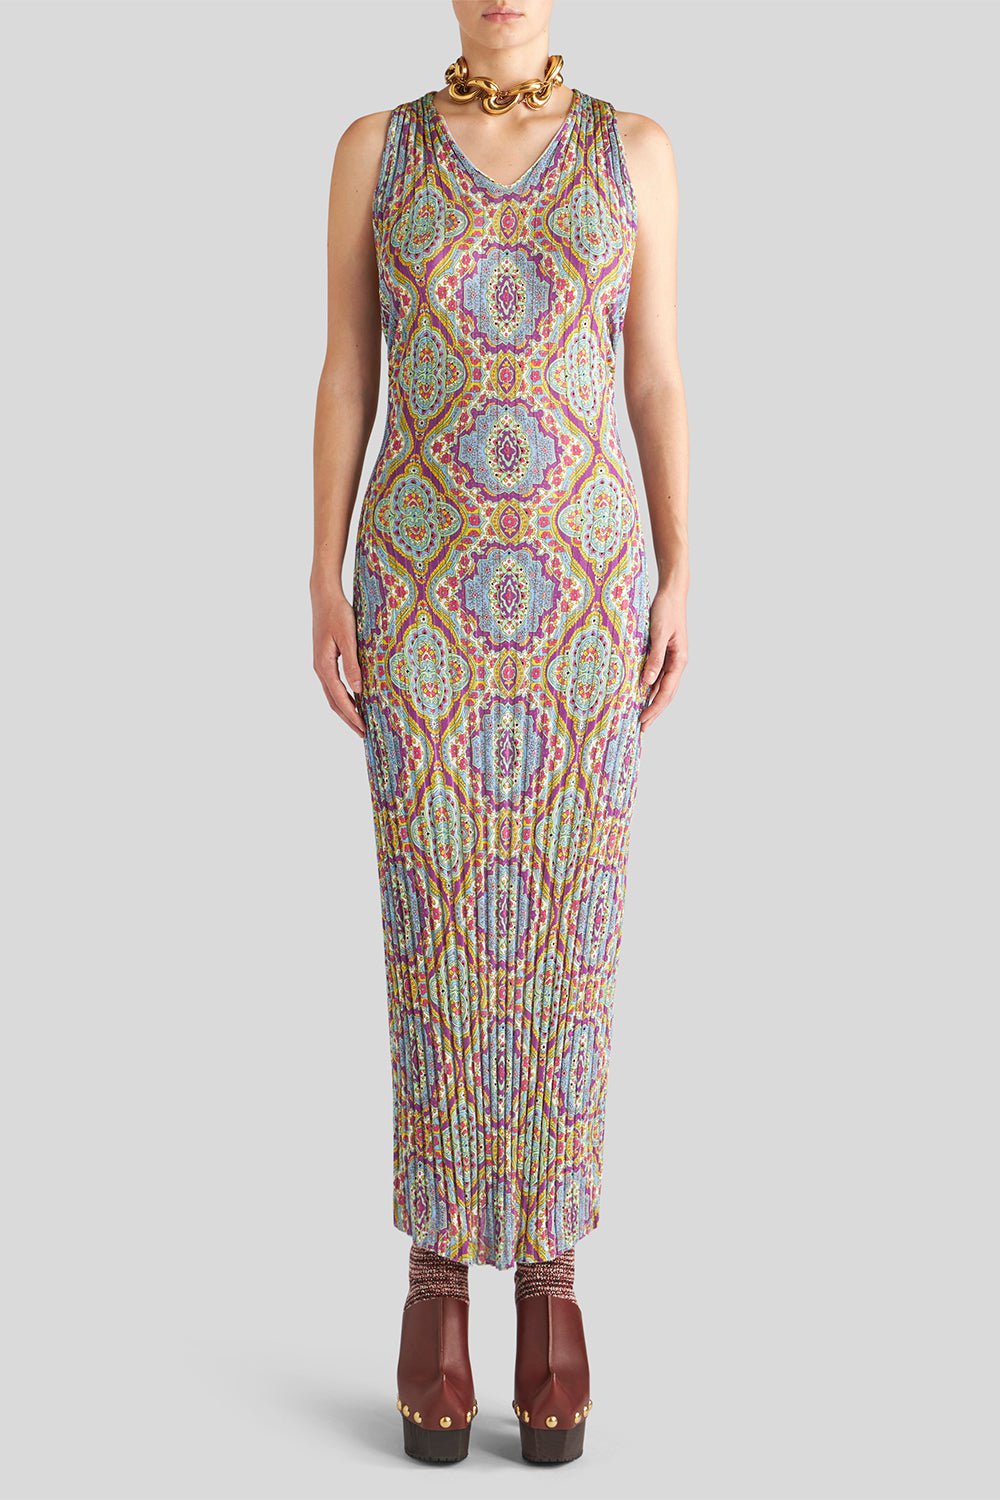 Reversible Printed Dress CLOTHINGDRESSCASUAL ETRO   